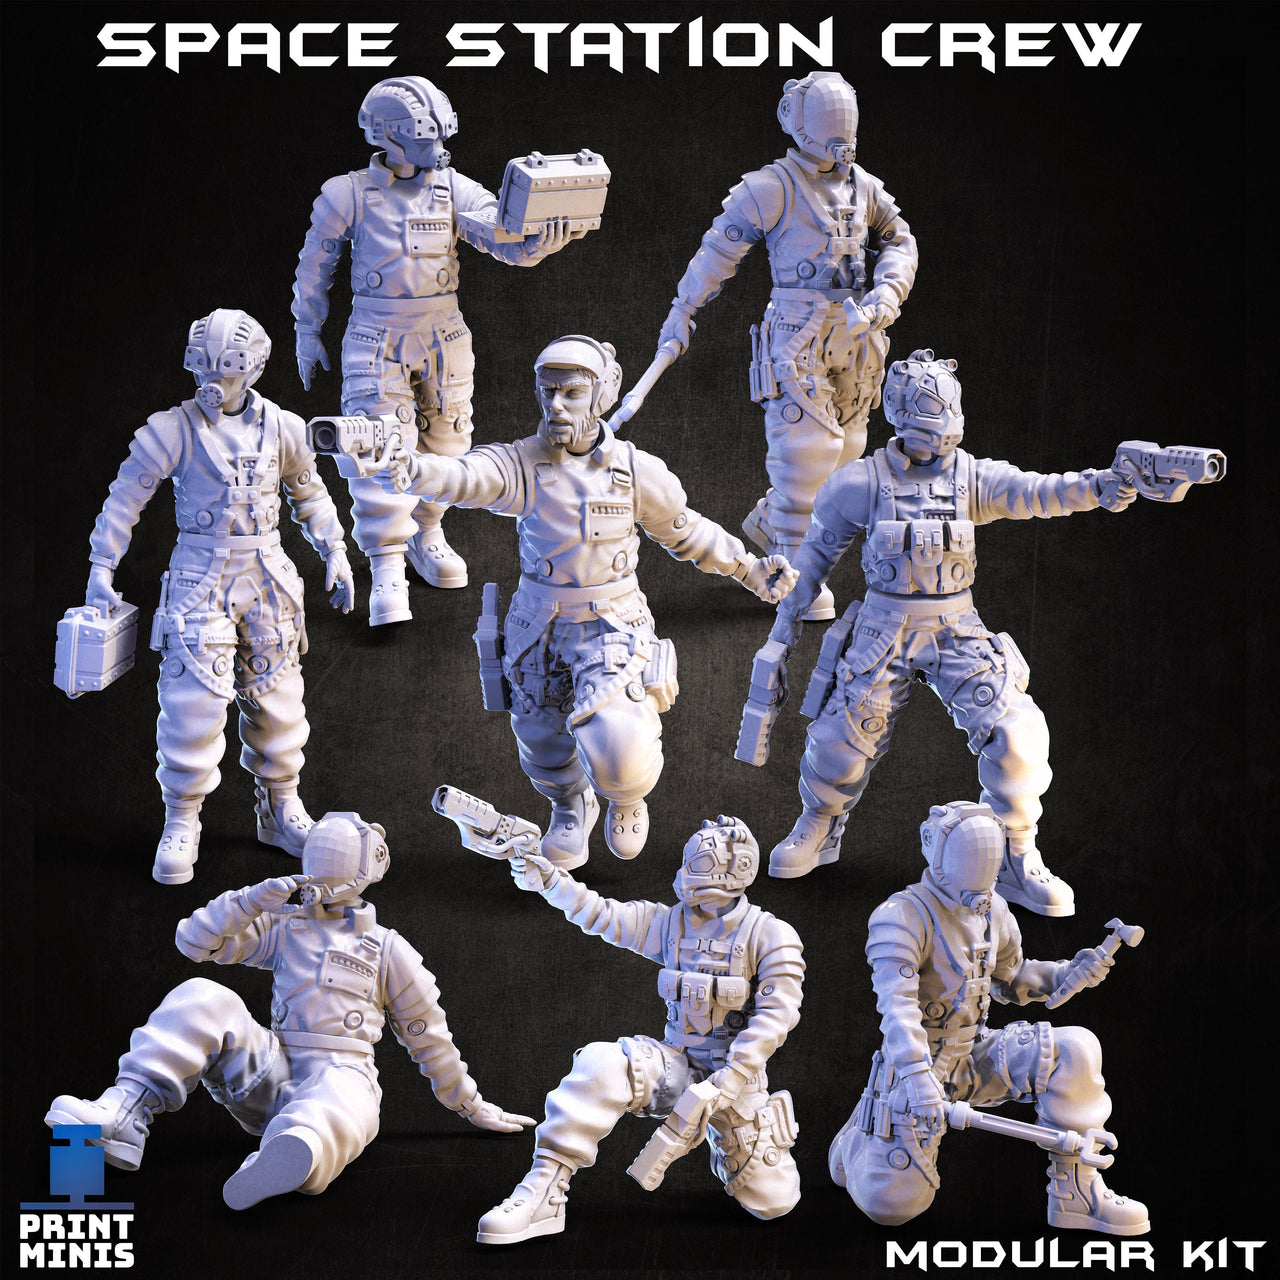 Modular Space Station Crew - Print Minis 